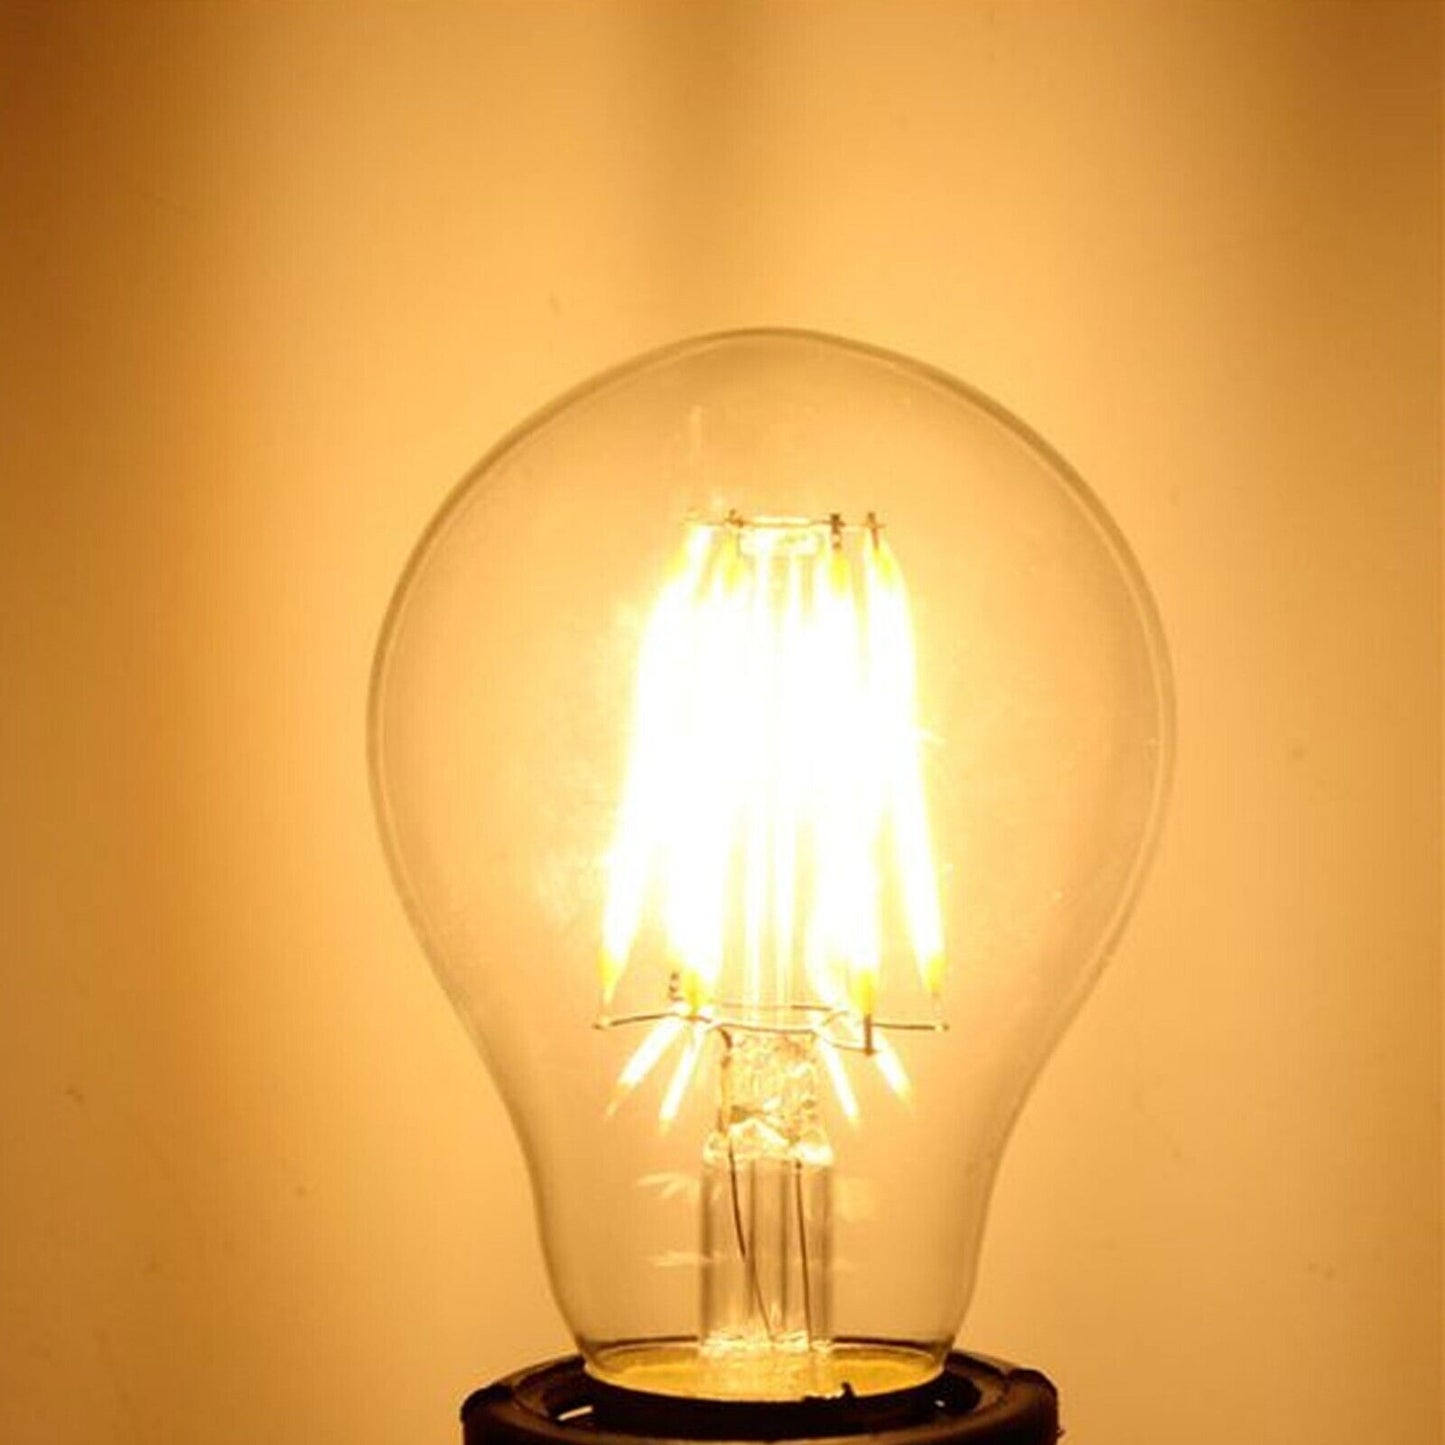 Vintage Industrial LED A60 B22 4W Warm White Amber Energy Saving Bulb